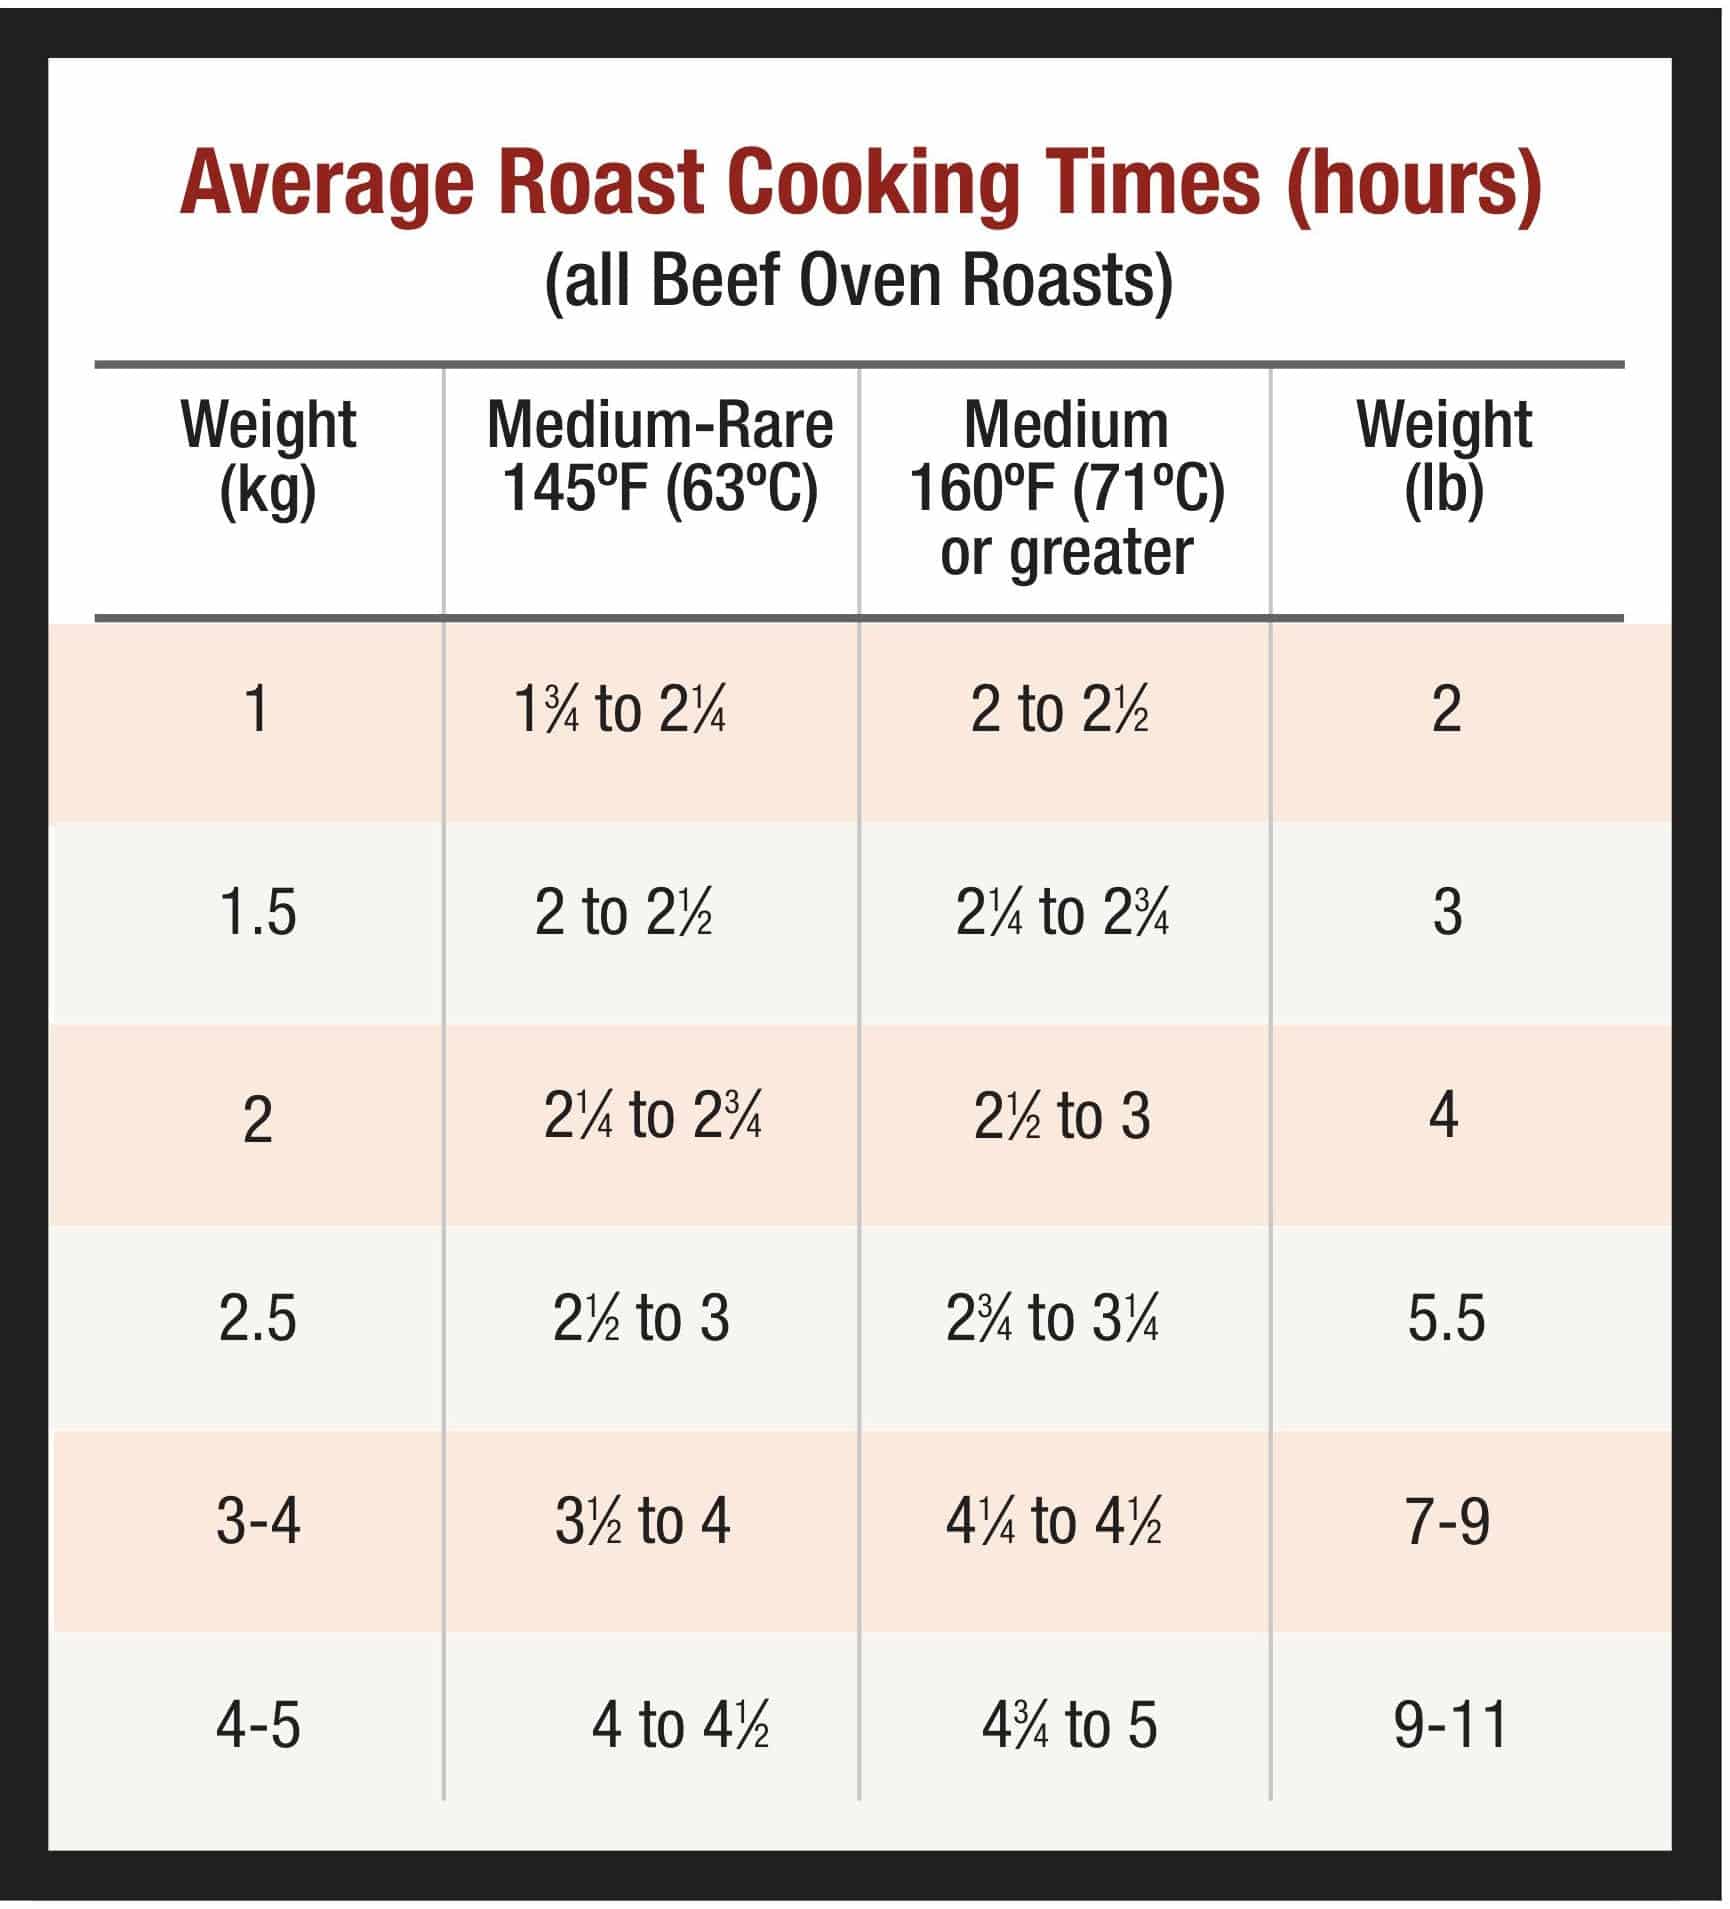 Prime Rib Cooking Chart